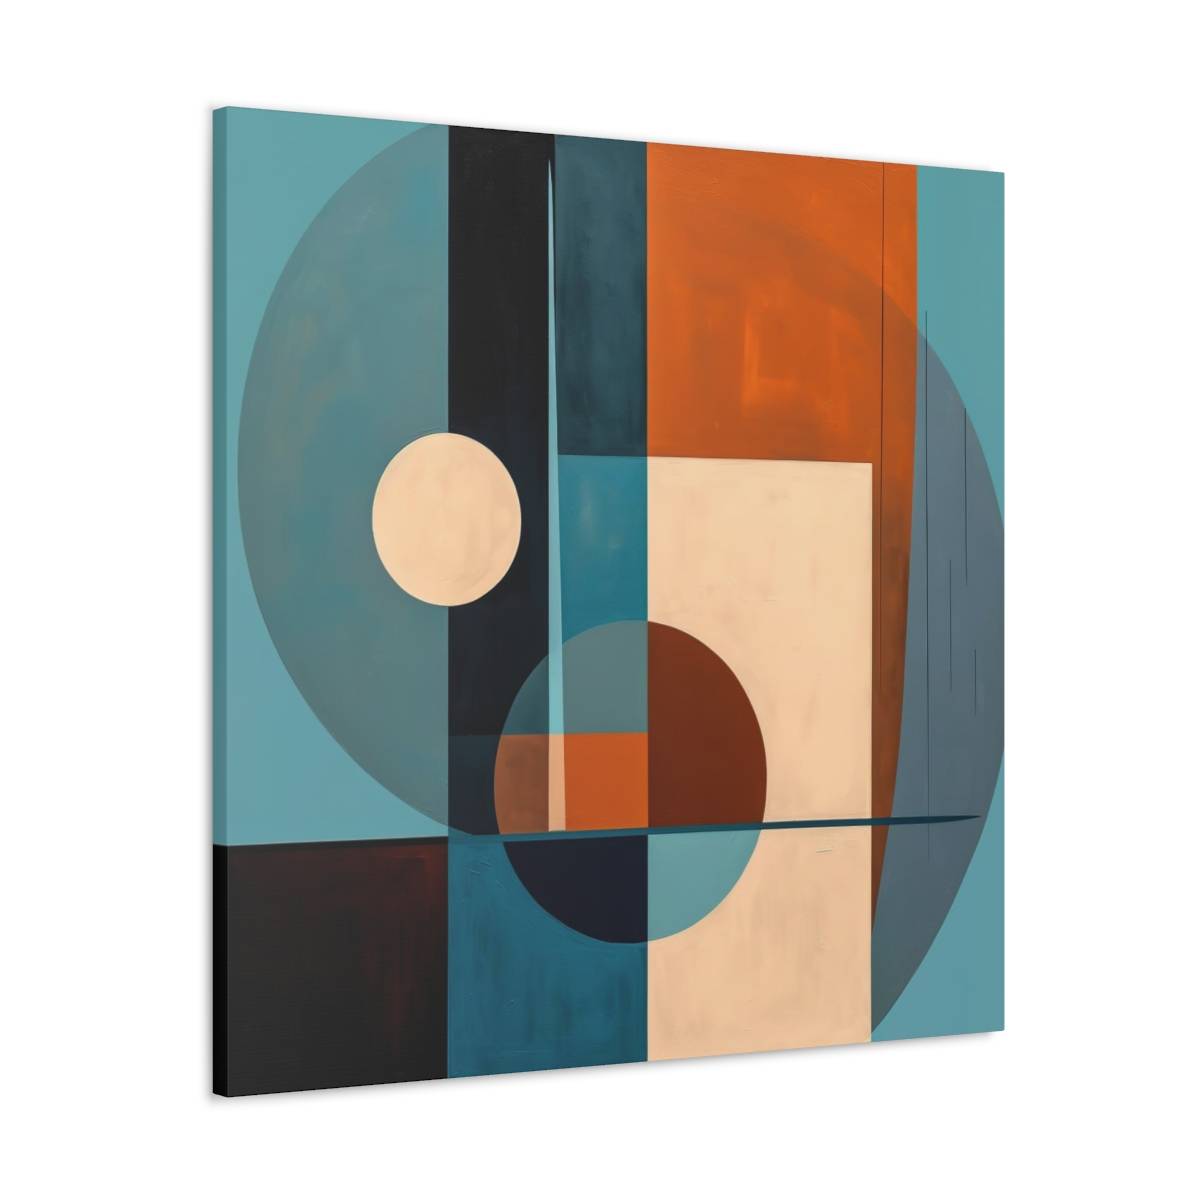 Geometric cubism abstract art